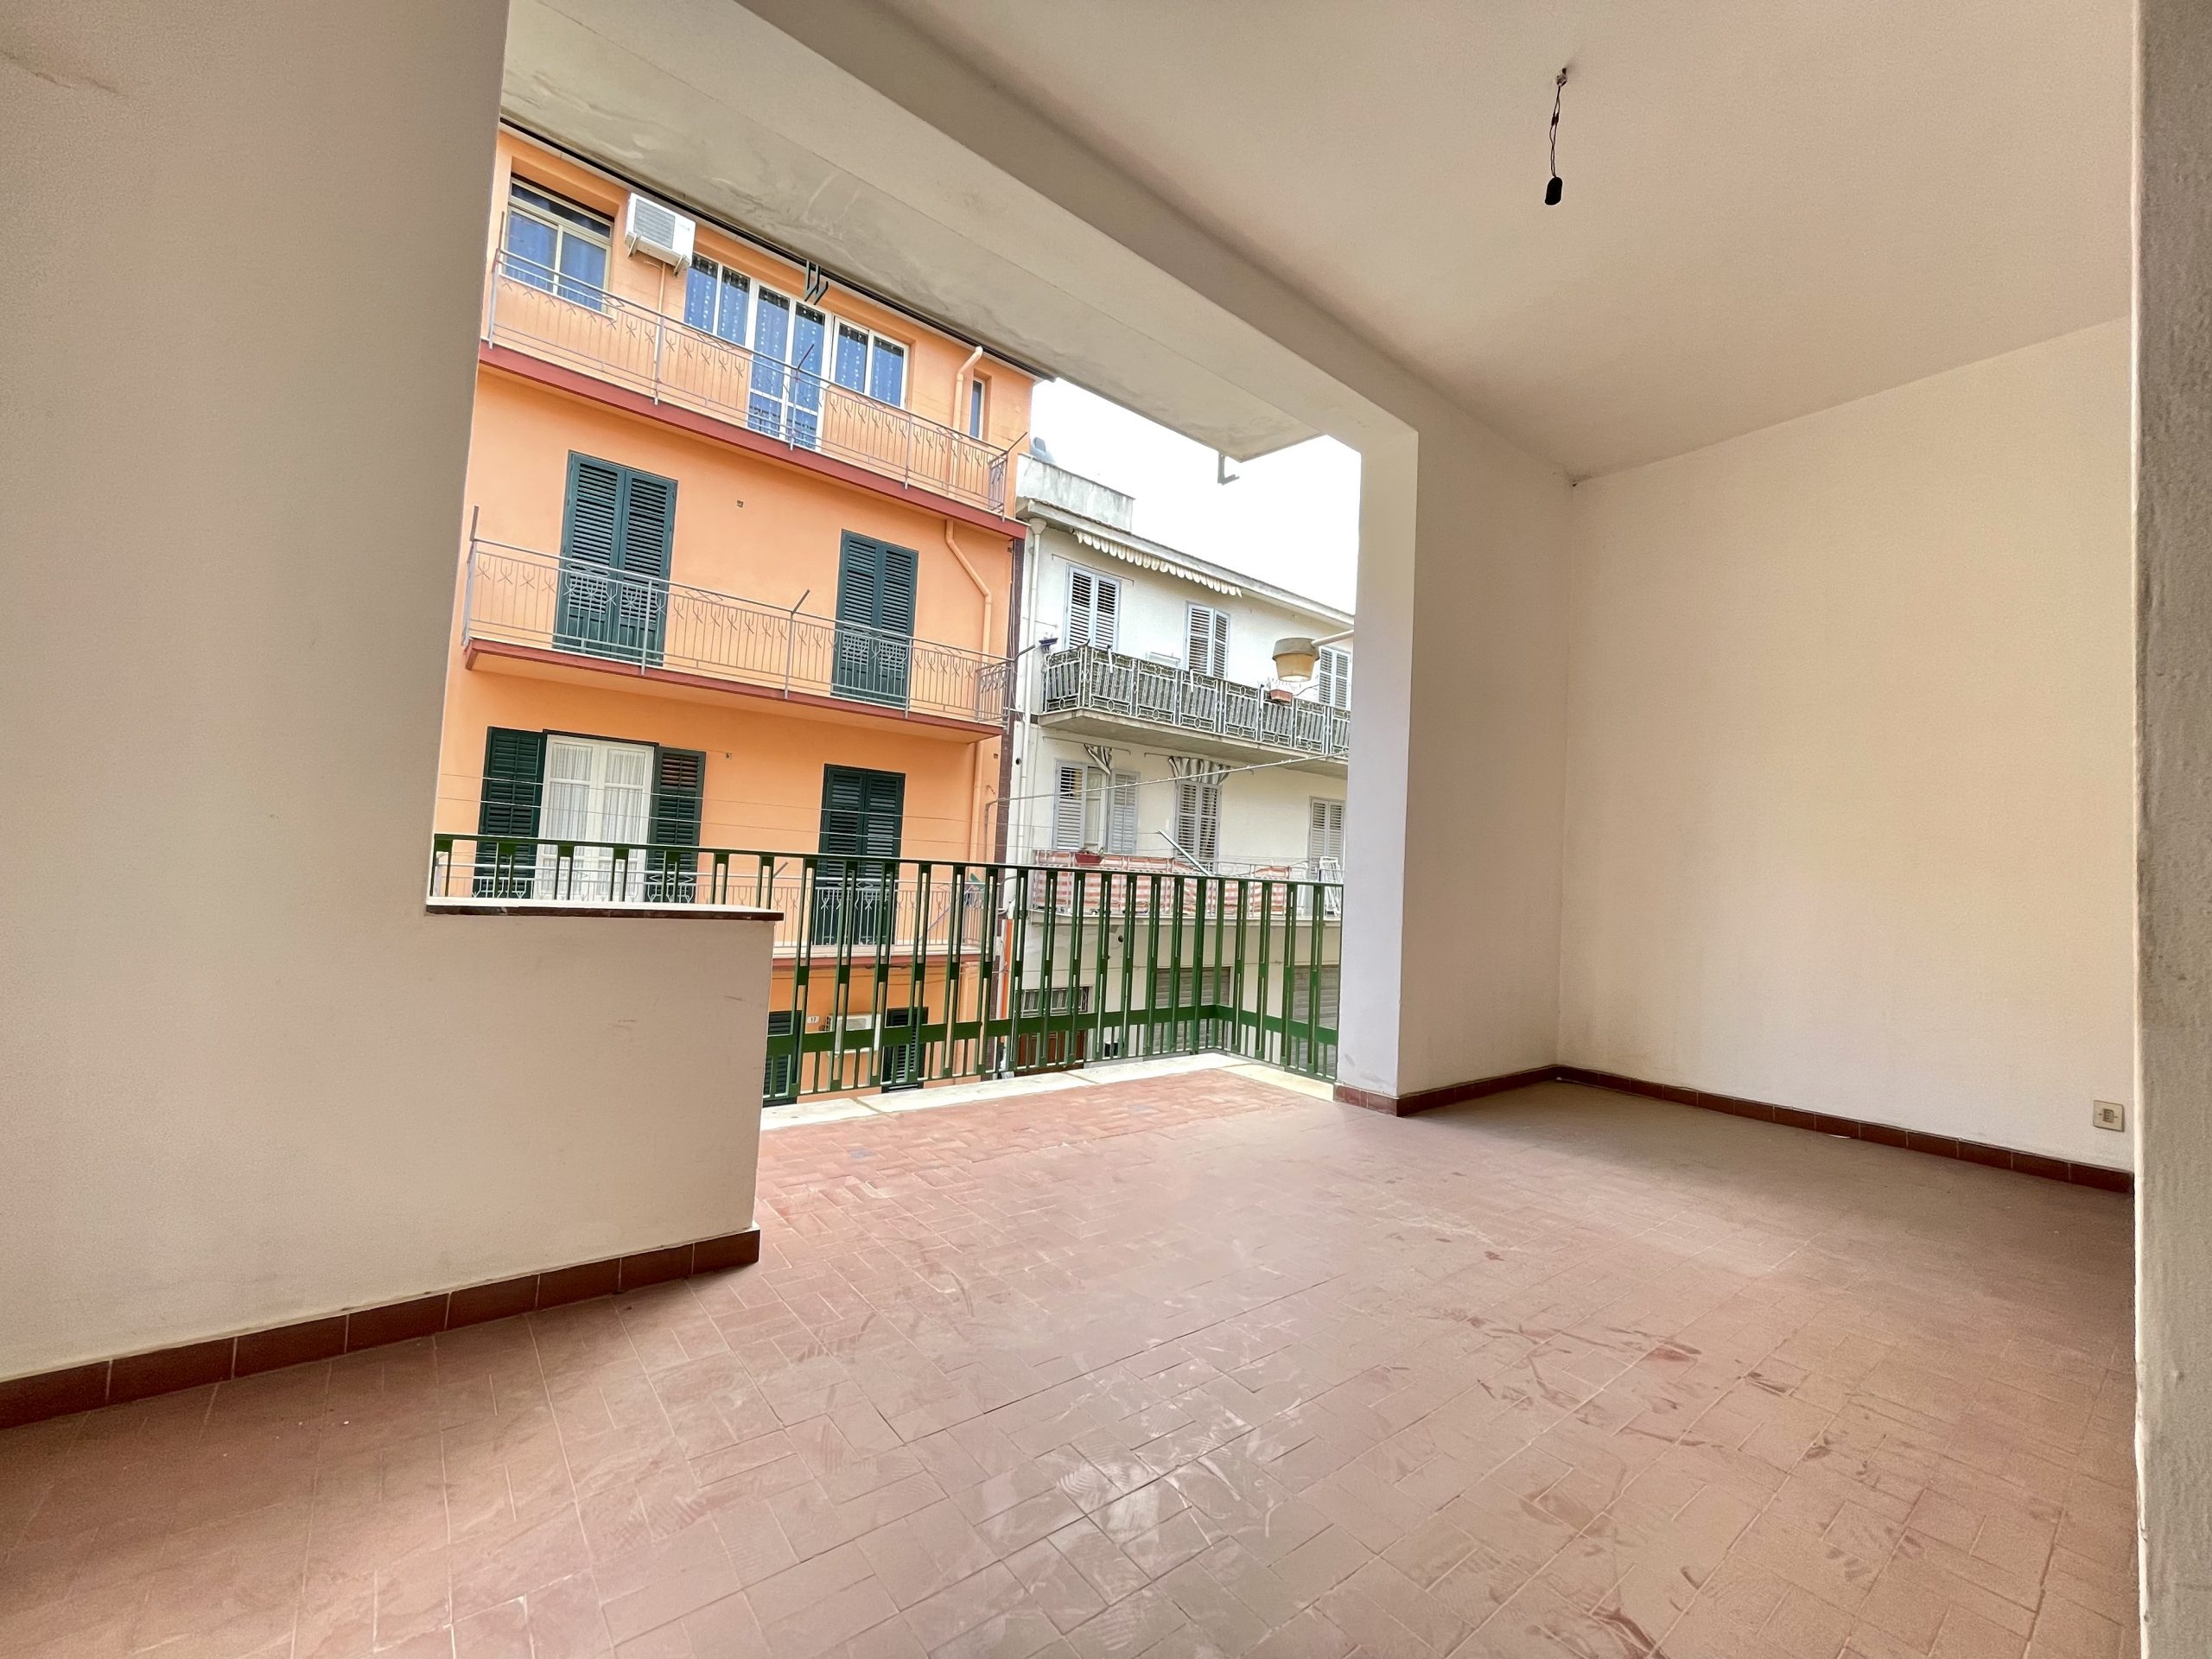 Appartamento con magazzini e giardino in vendita a Partinico, Via Ragusa